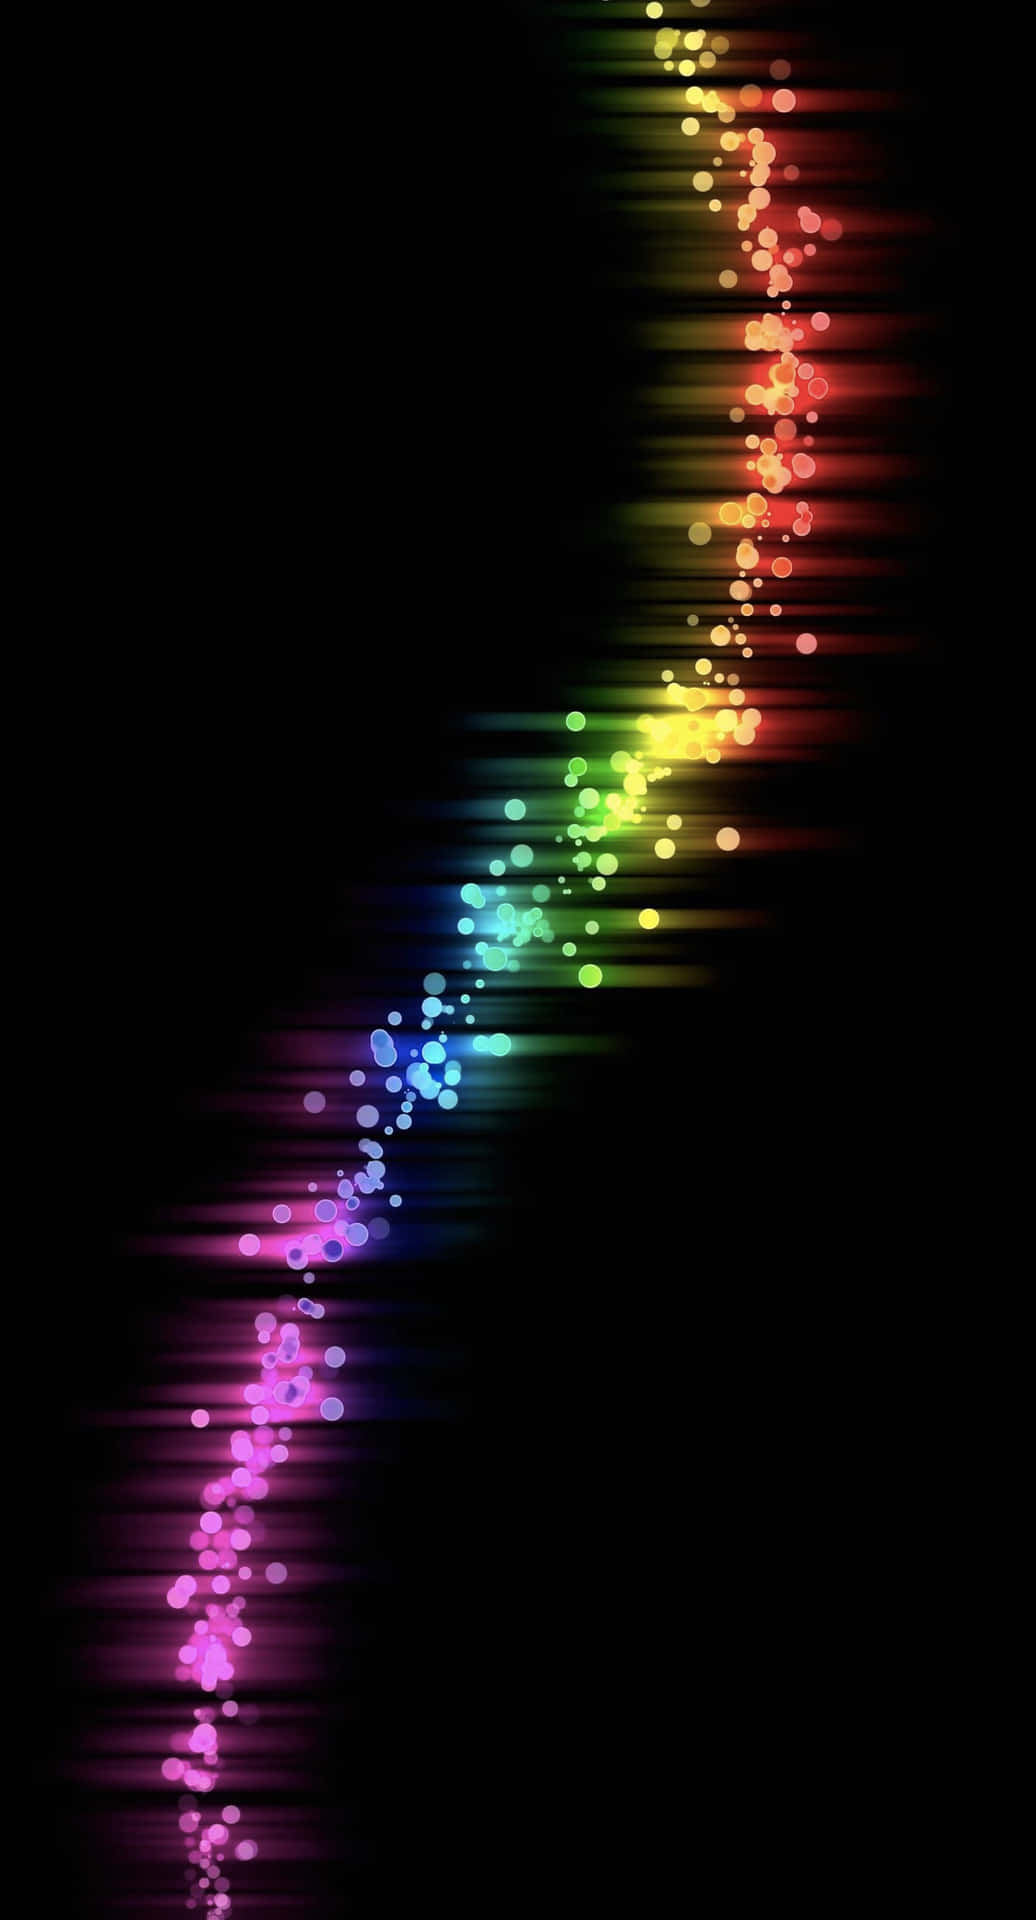 Vibrant geometric shapes on Color Phone wallpaper Wallpaper